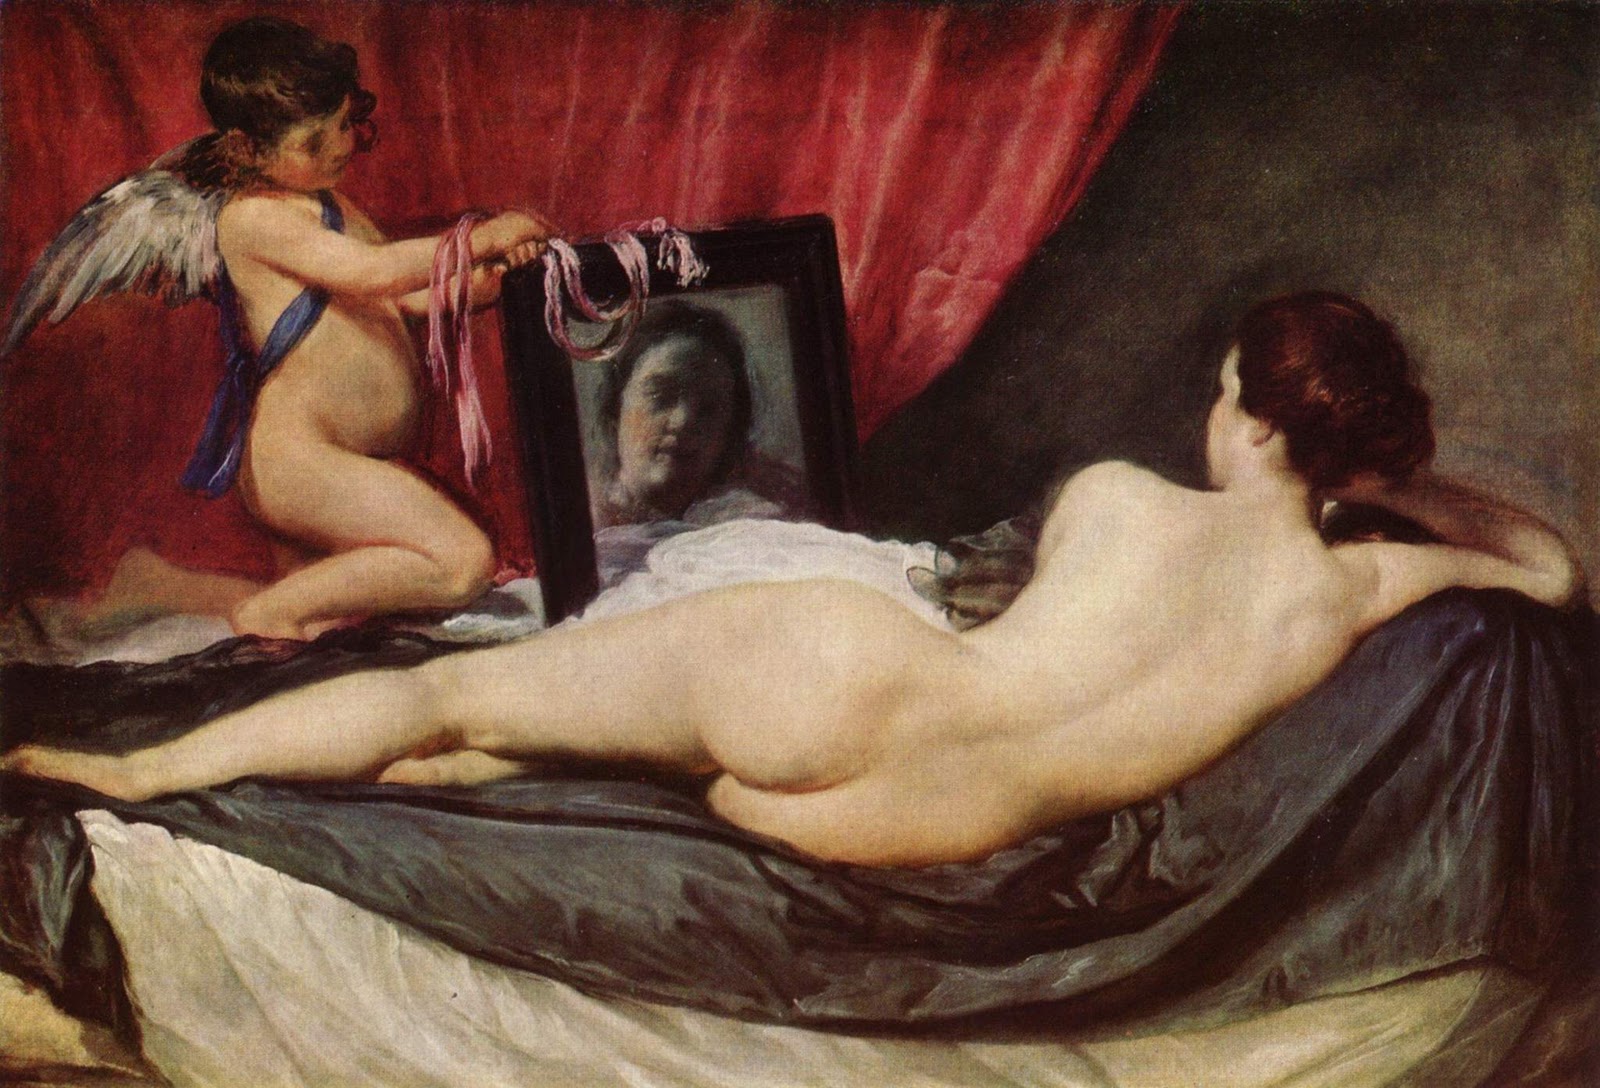 La Venus del espejo. Diego Velázquez